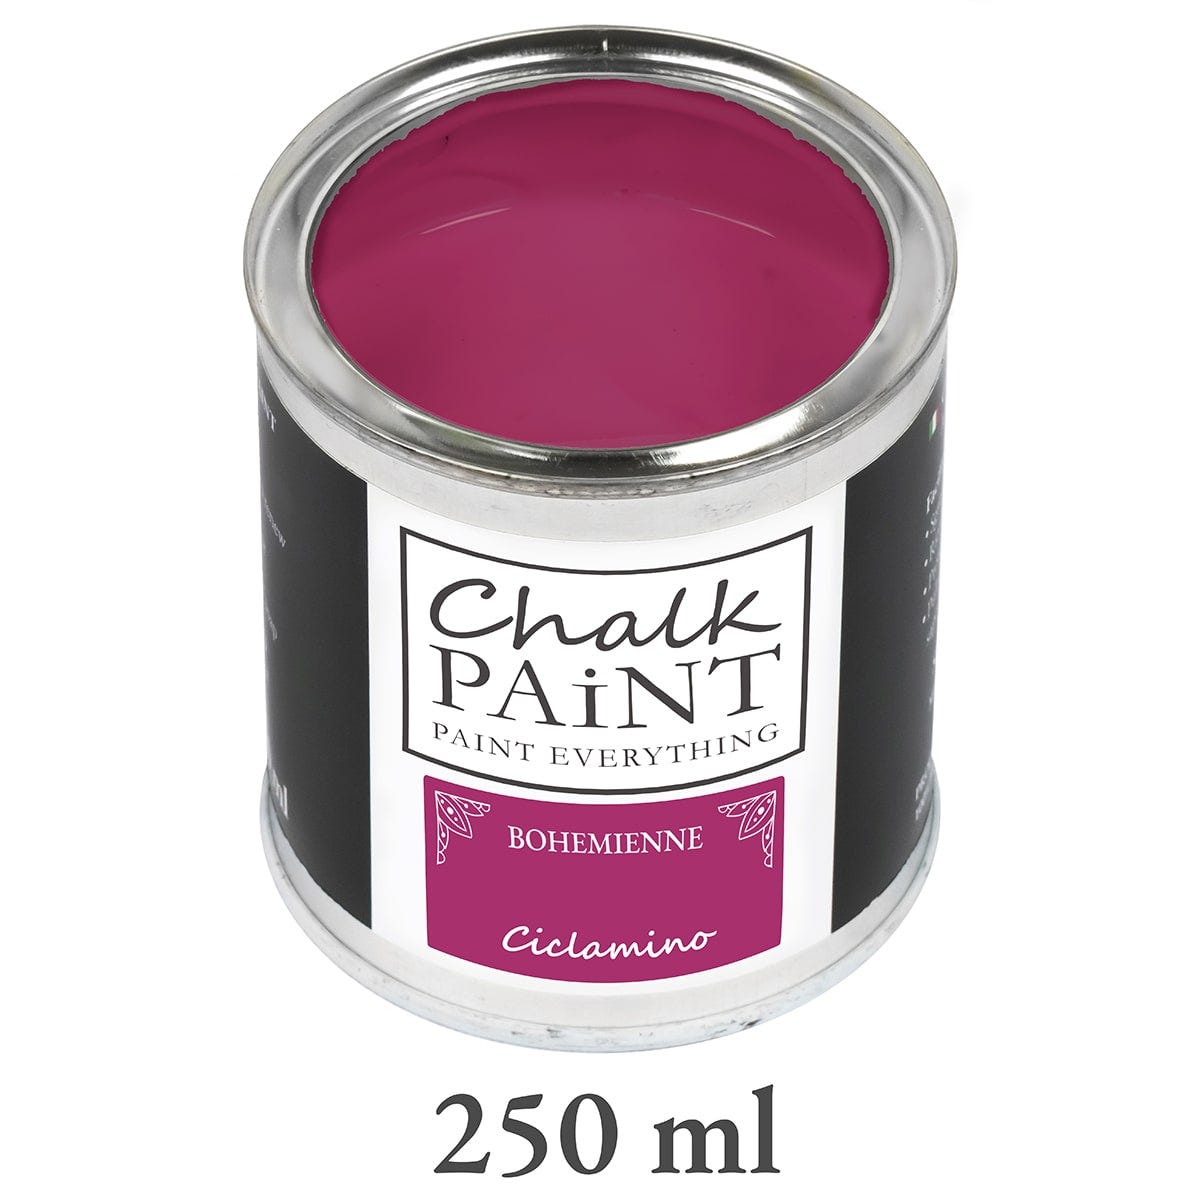 620 Pintura a la Tiza [Chalk Paint] ideas